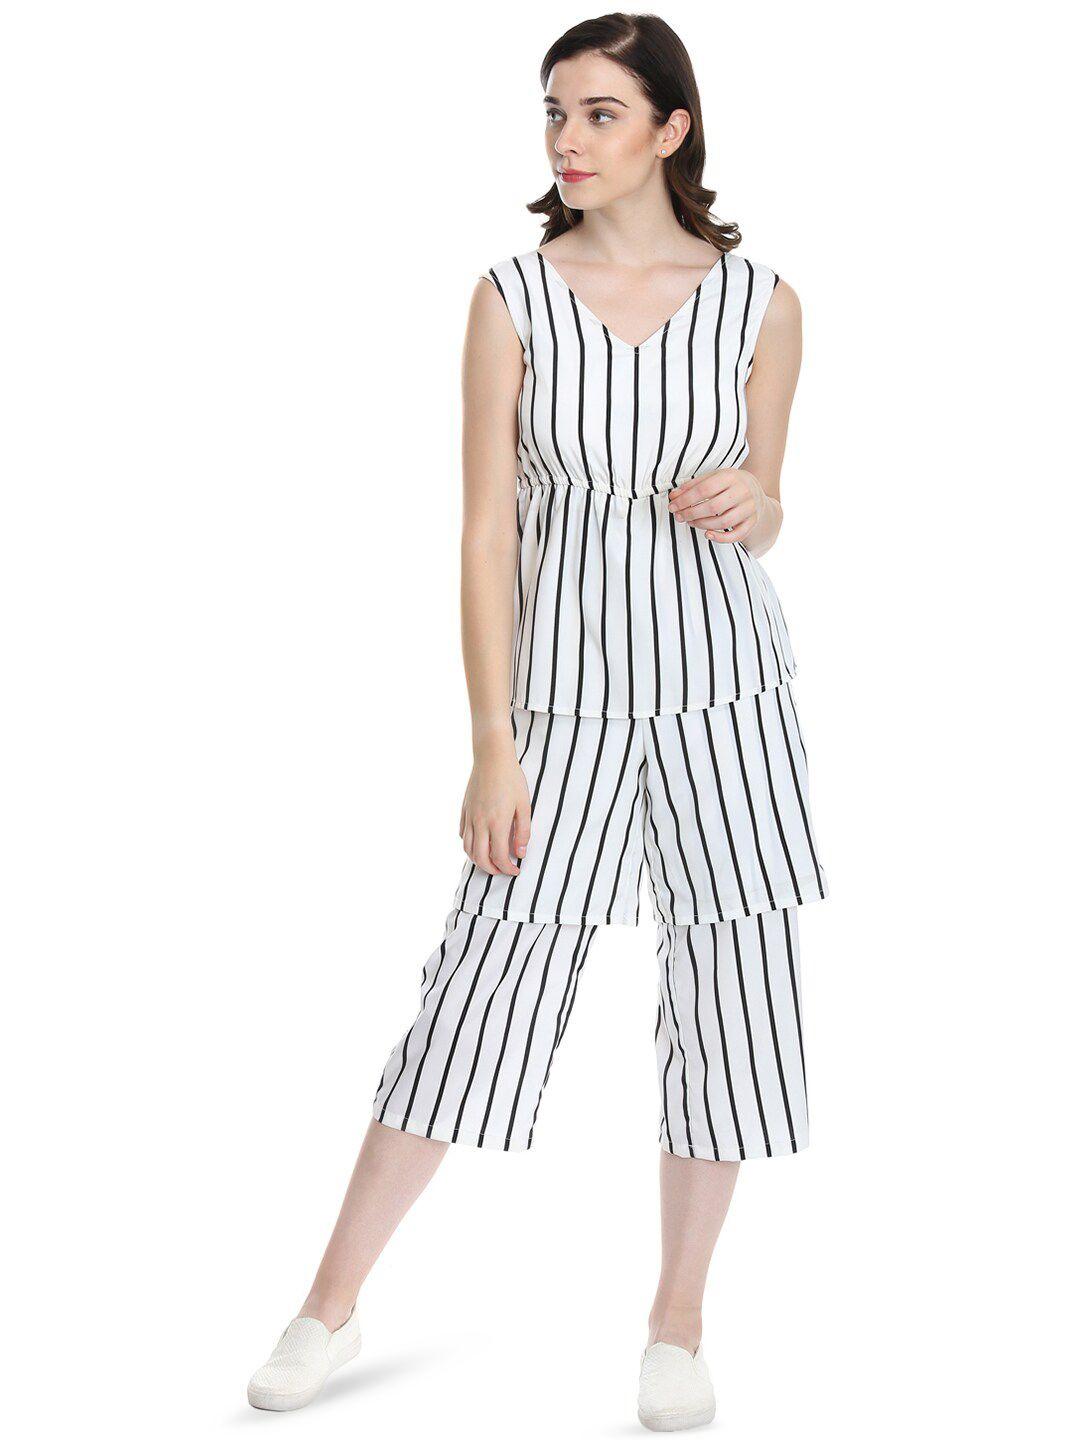 dodo & moa white & black layered sleeveless striped capri jumpsuit